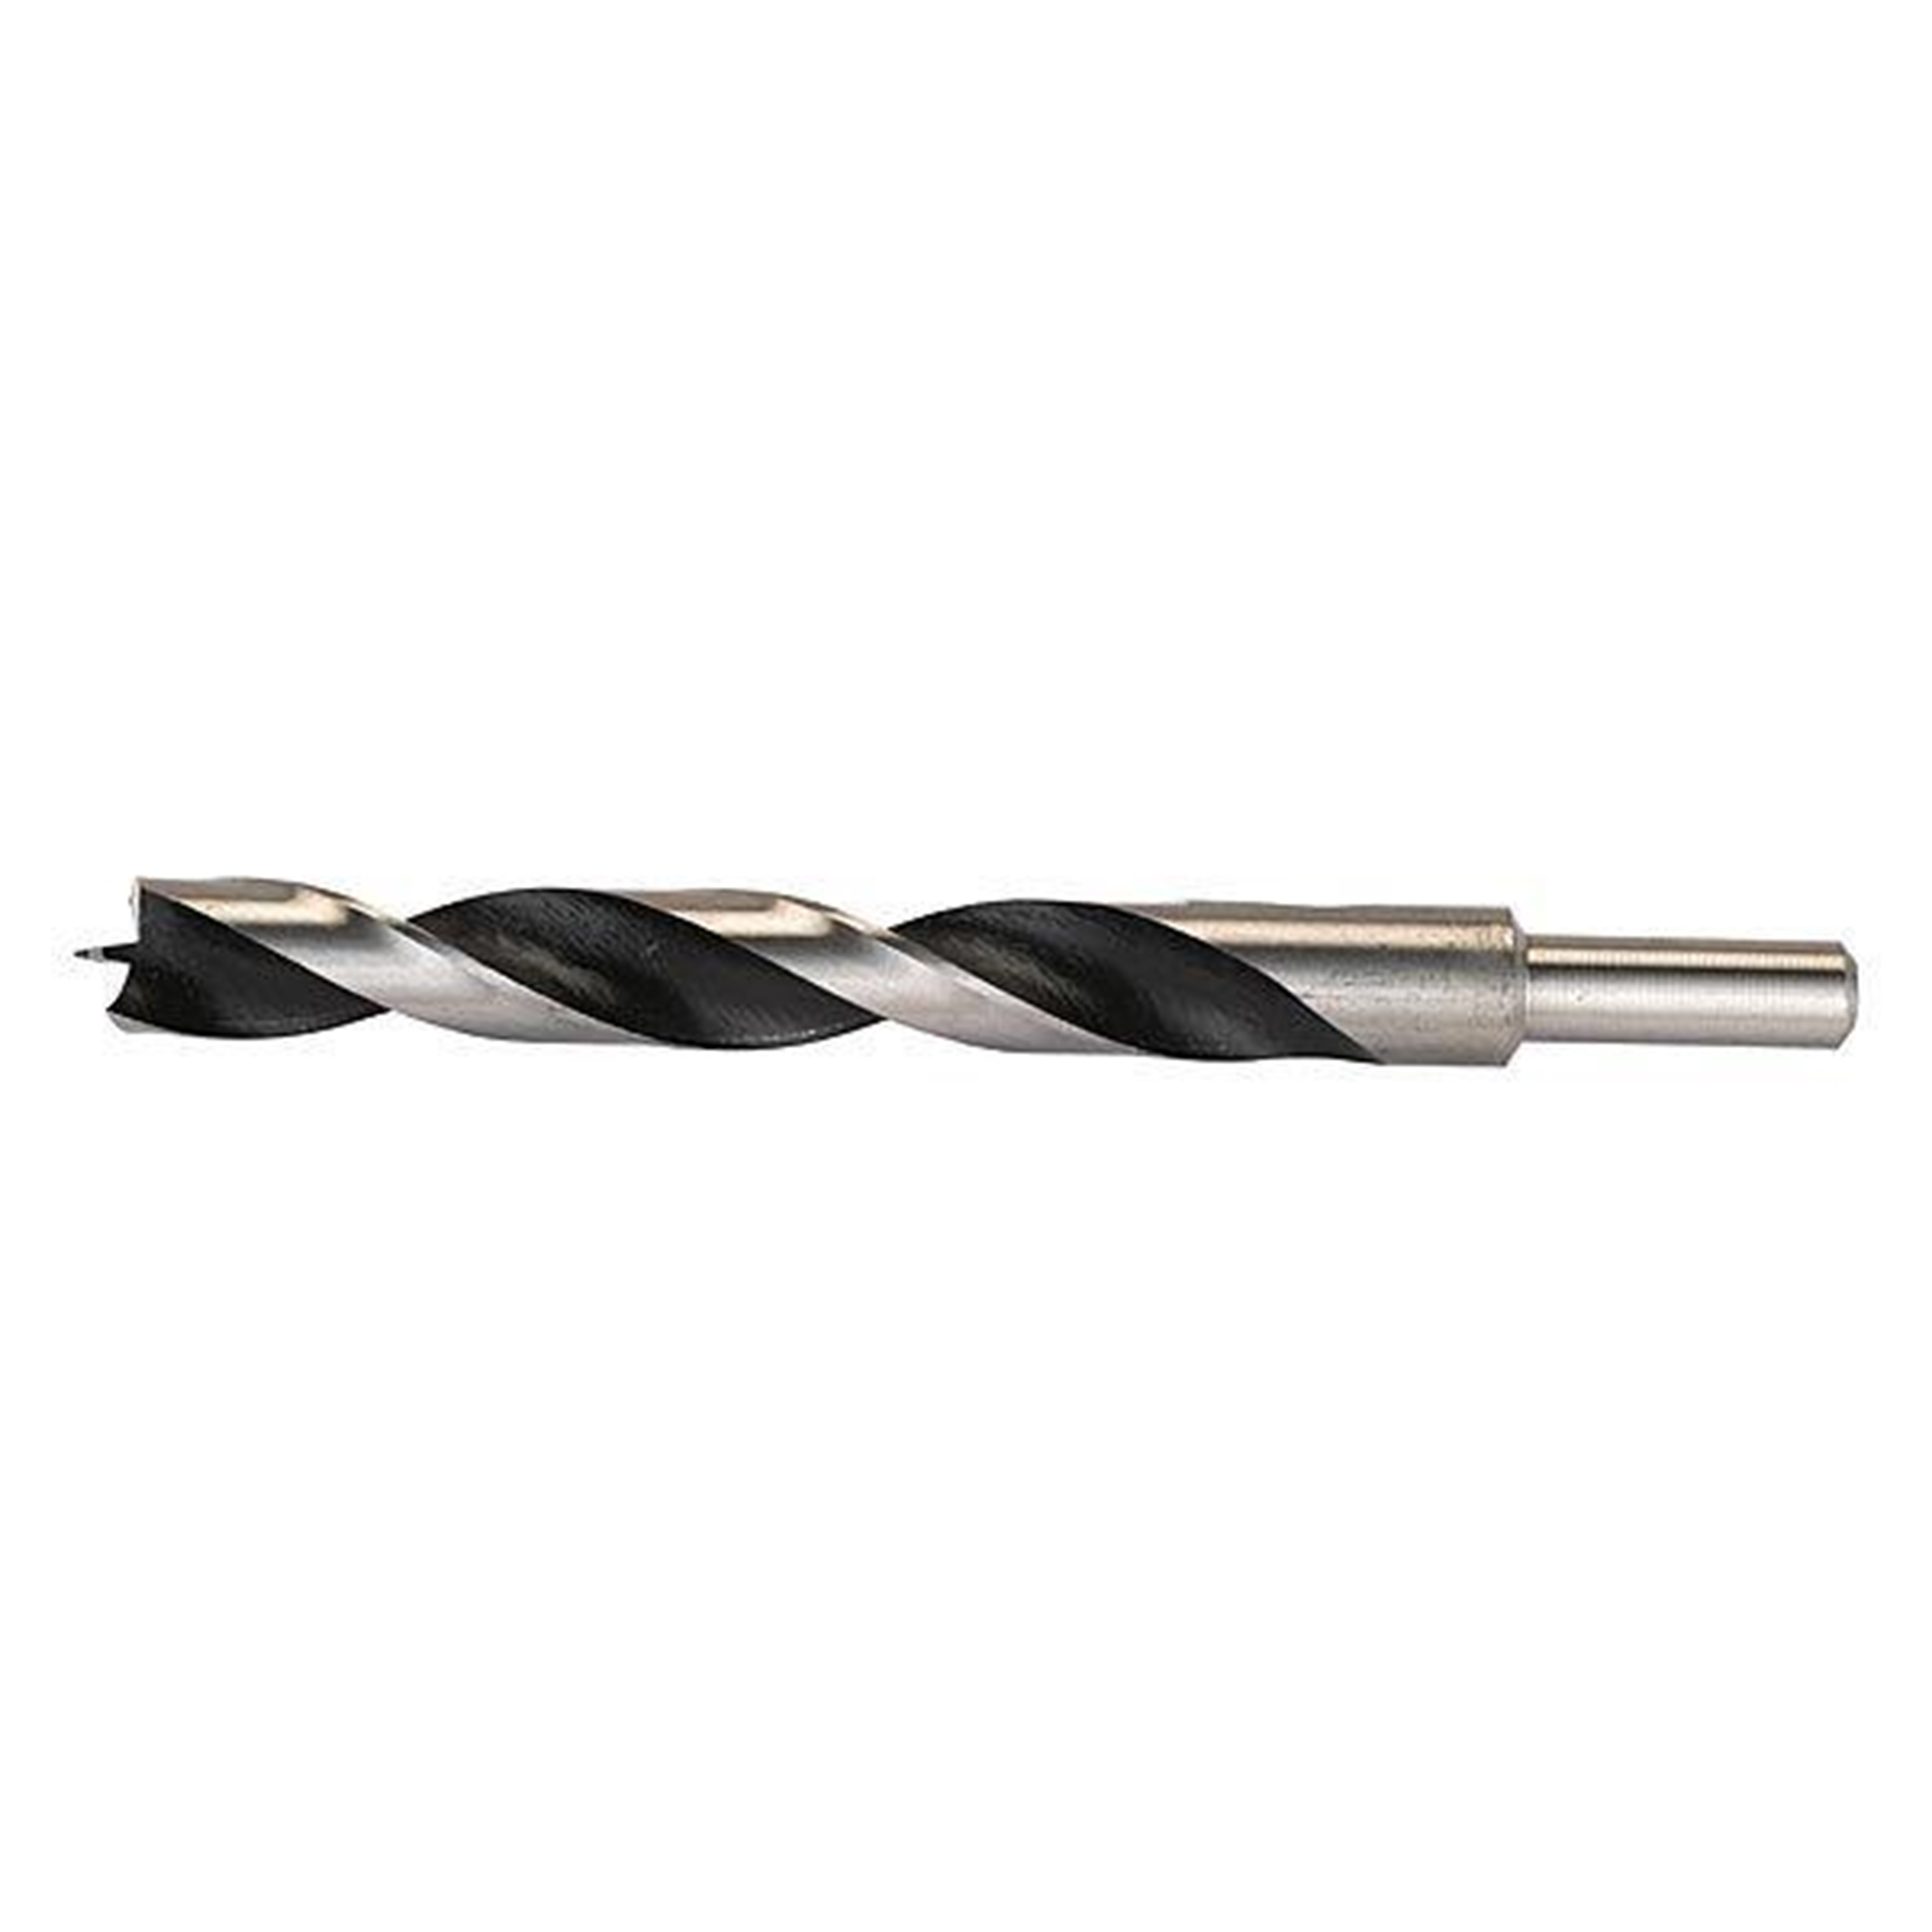 15mm Chrome-vanadium Steel Brad Point Drill Bit